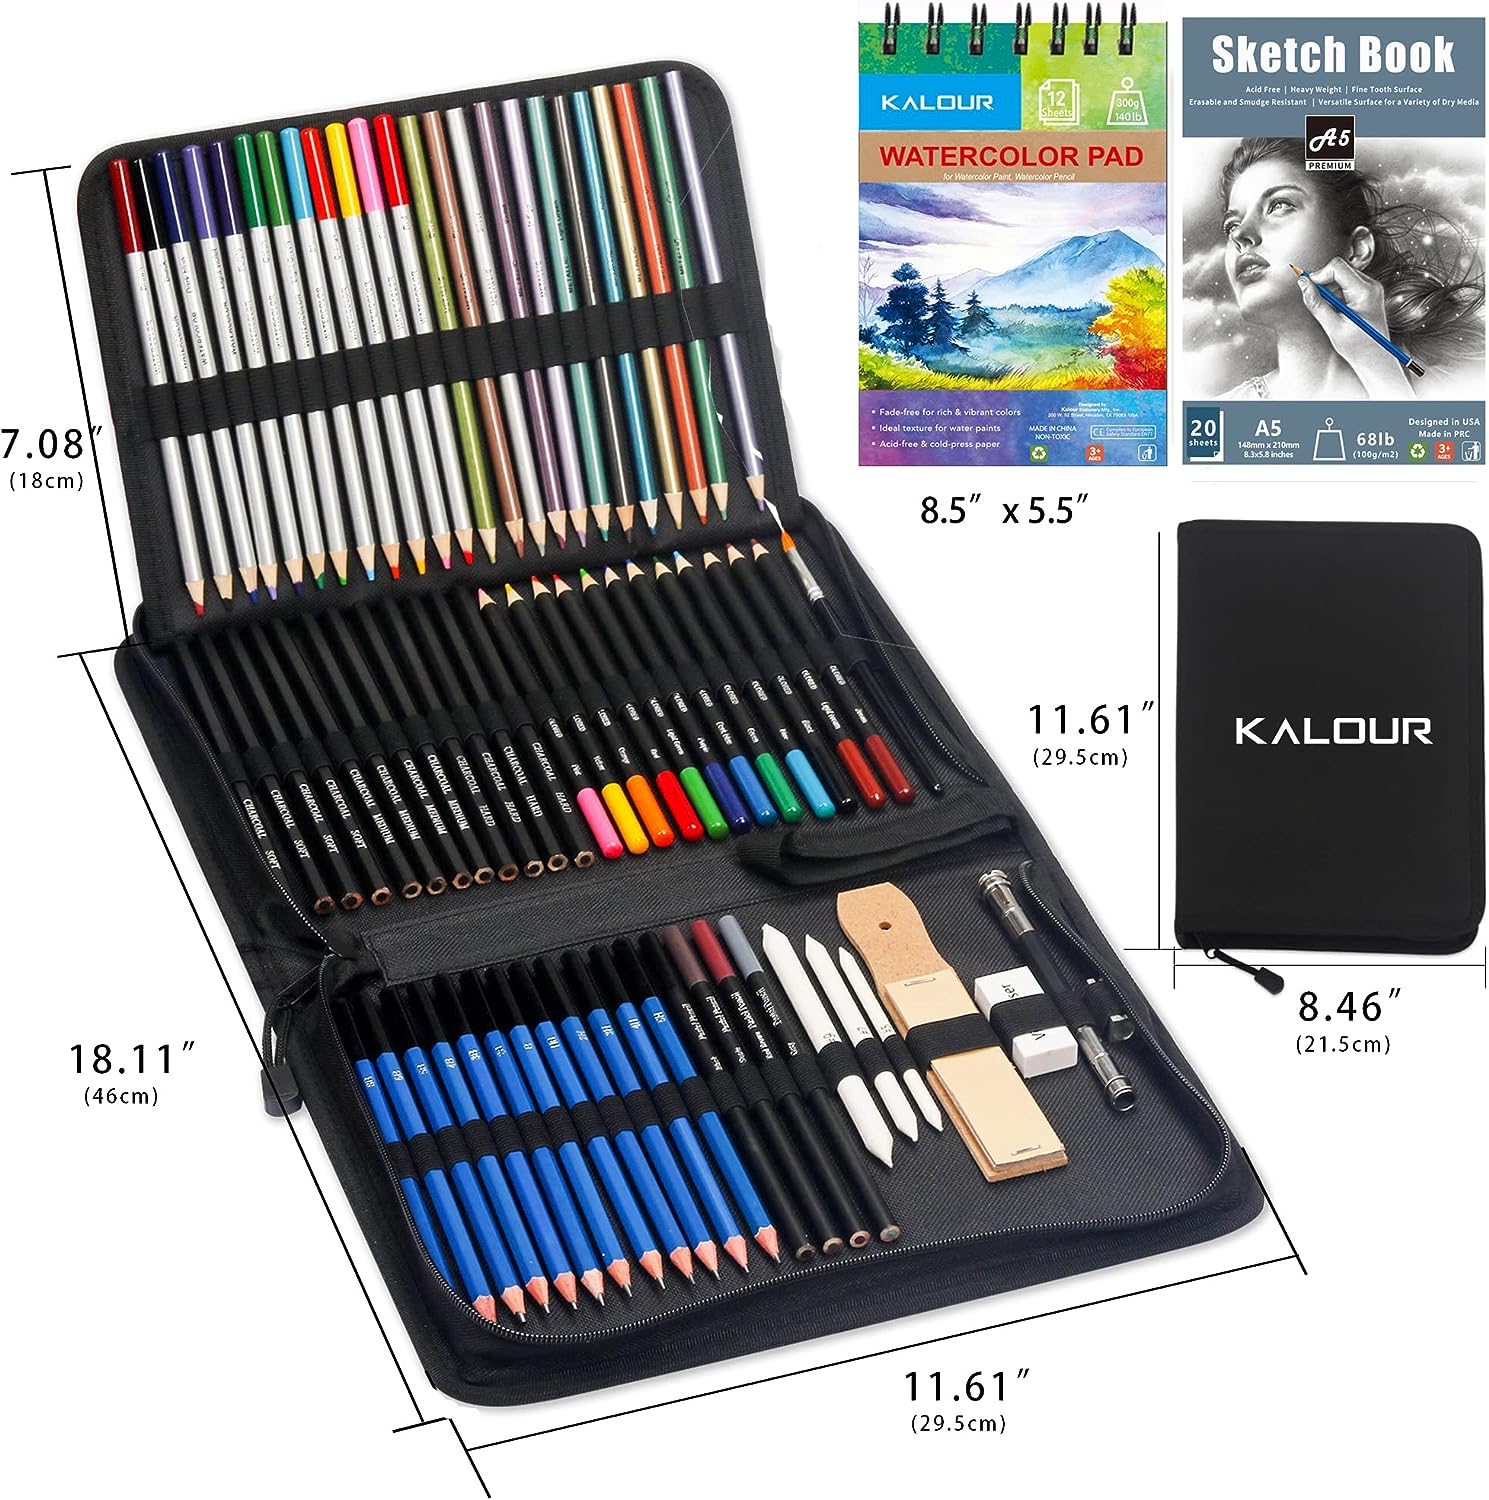 Black Wood Color Pencil Set, Model Name/Number: 145 Pcs Sketching Drawing  Kit